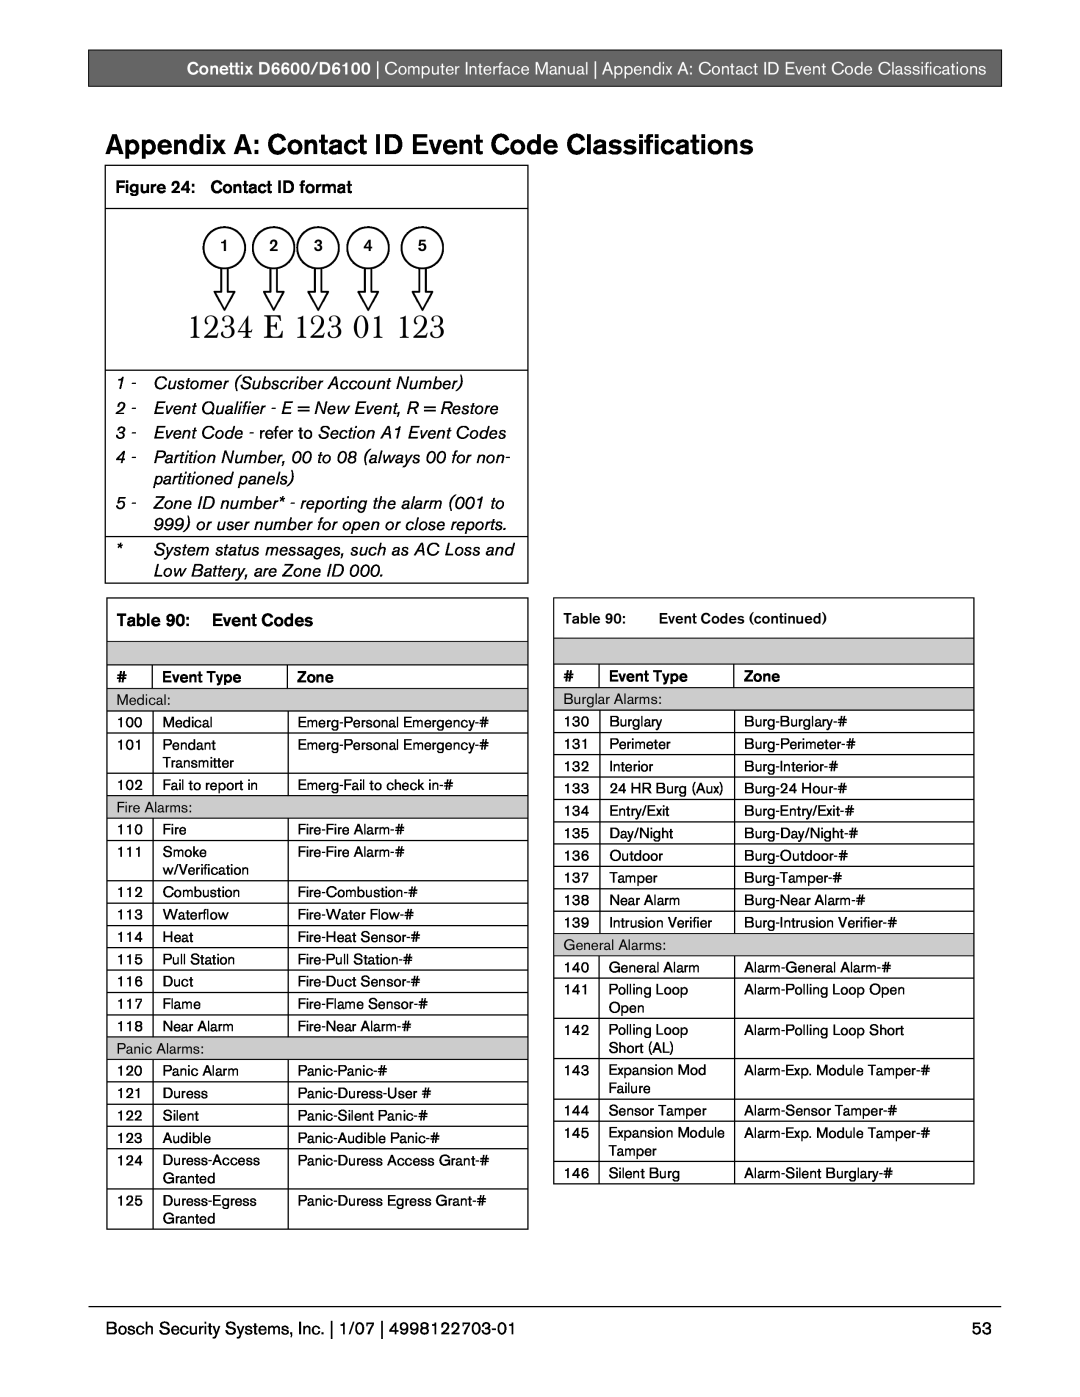 Bosch Appliances D6100 Appendix A Contact ID Event Code Classifications, Contact ID format, 1 2 3 4, partitioned panels 